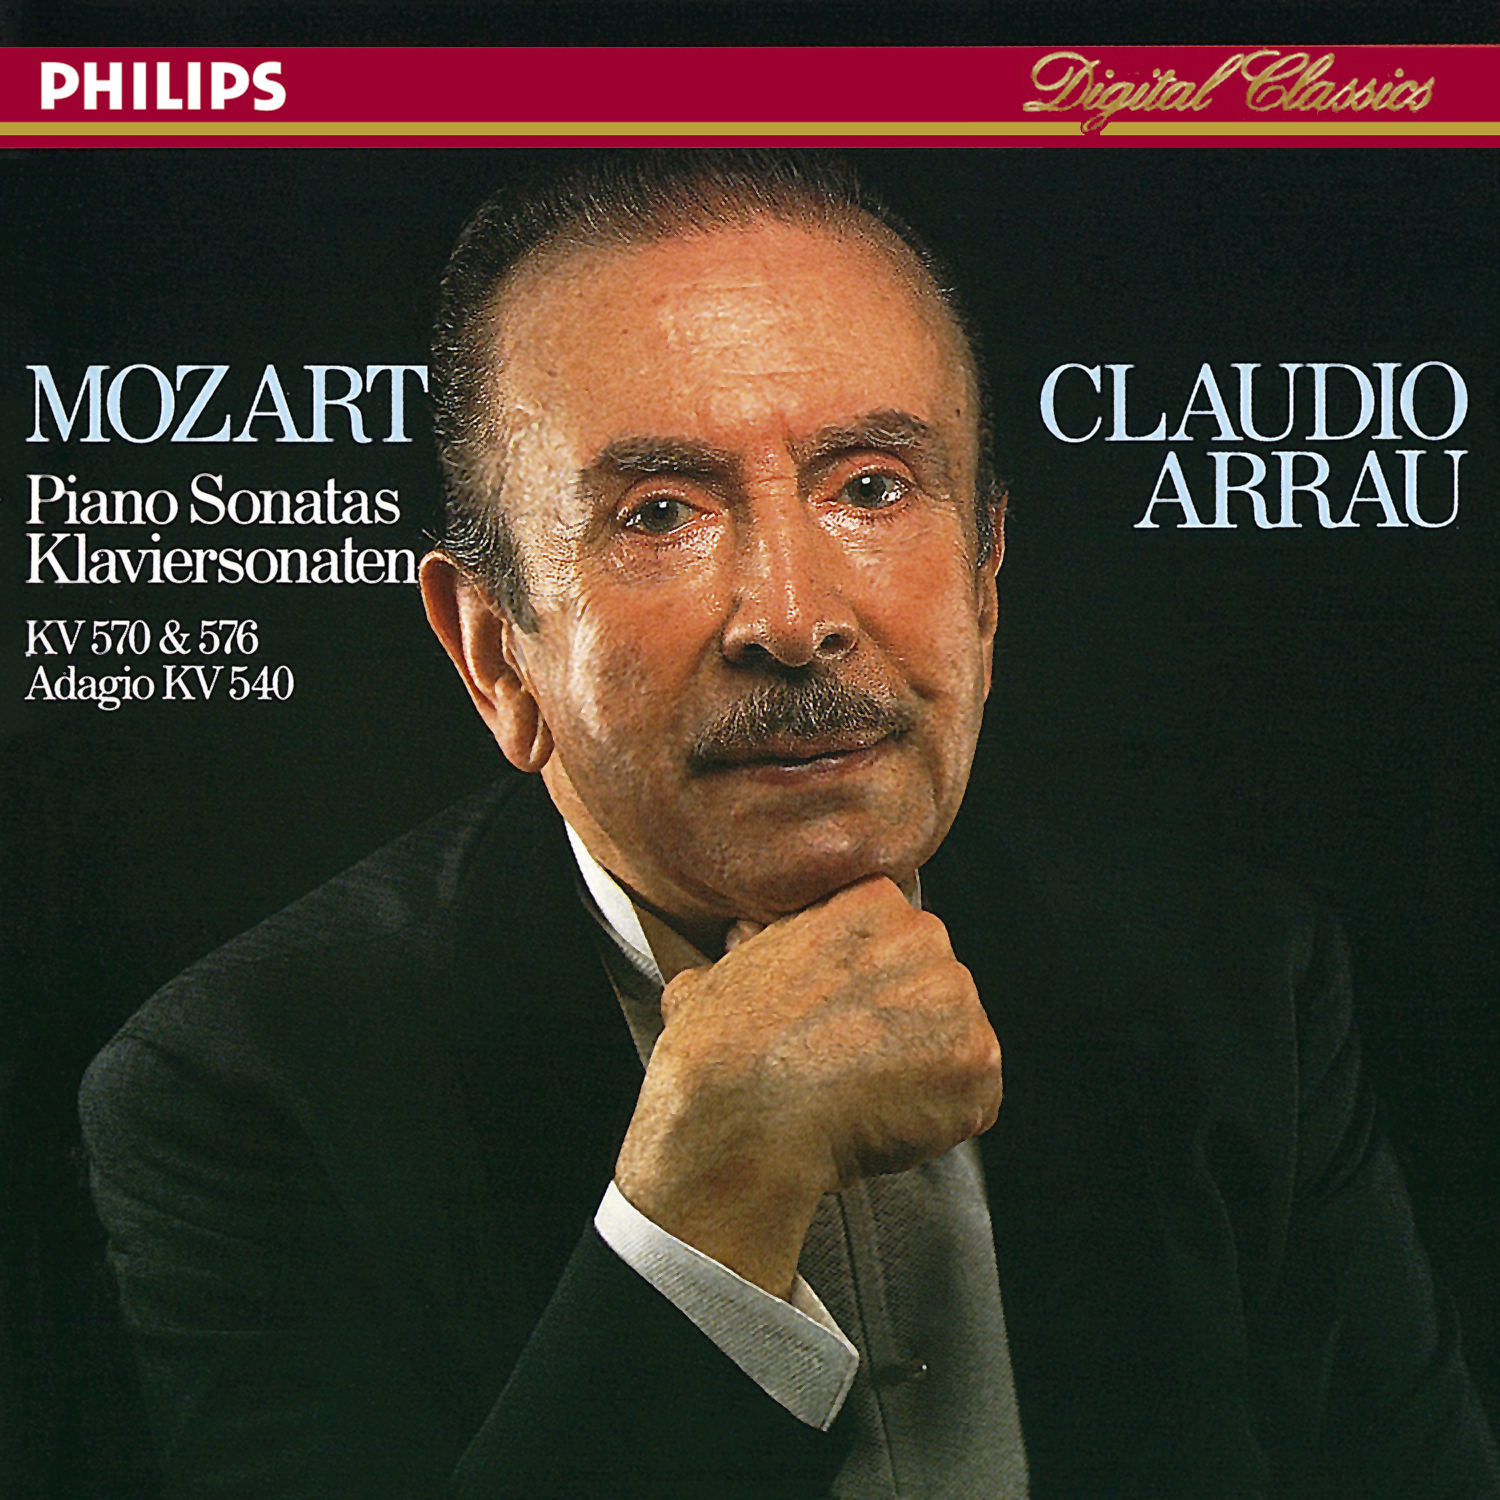 Claudio Arrau - Piano Sonata No.17 in B flat, K.570:2. Adagio